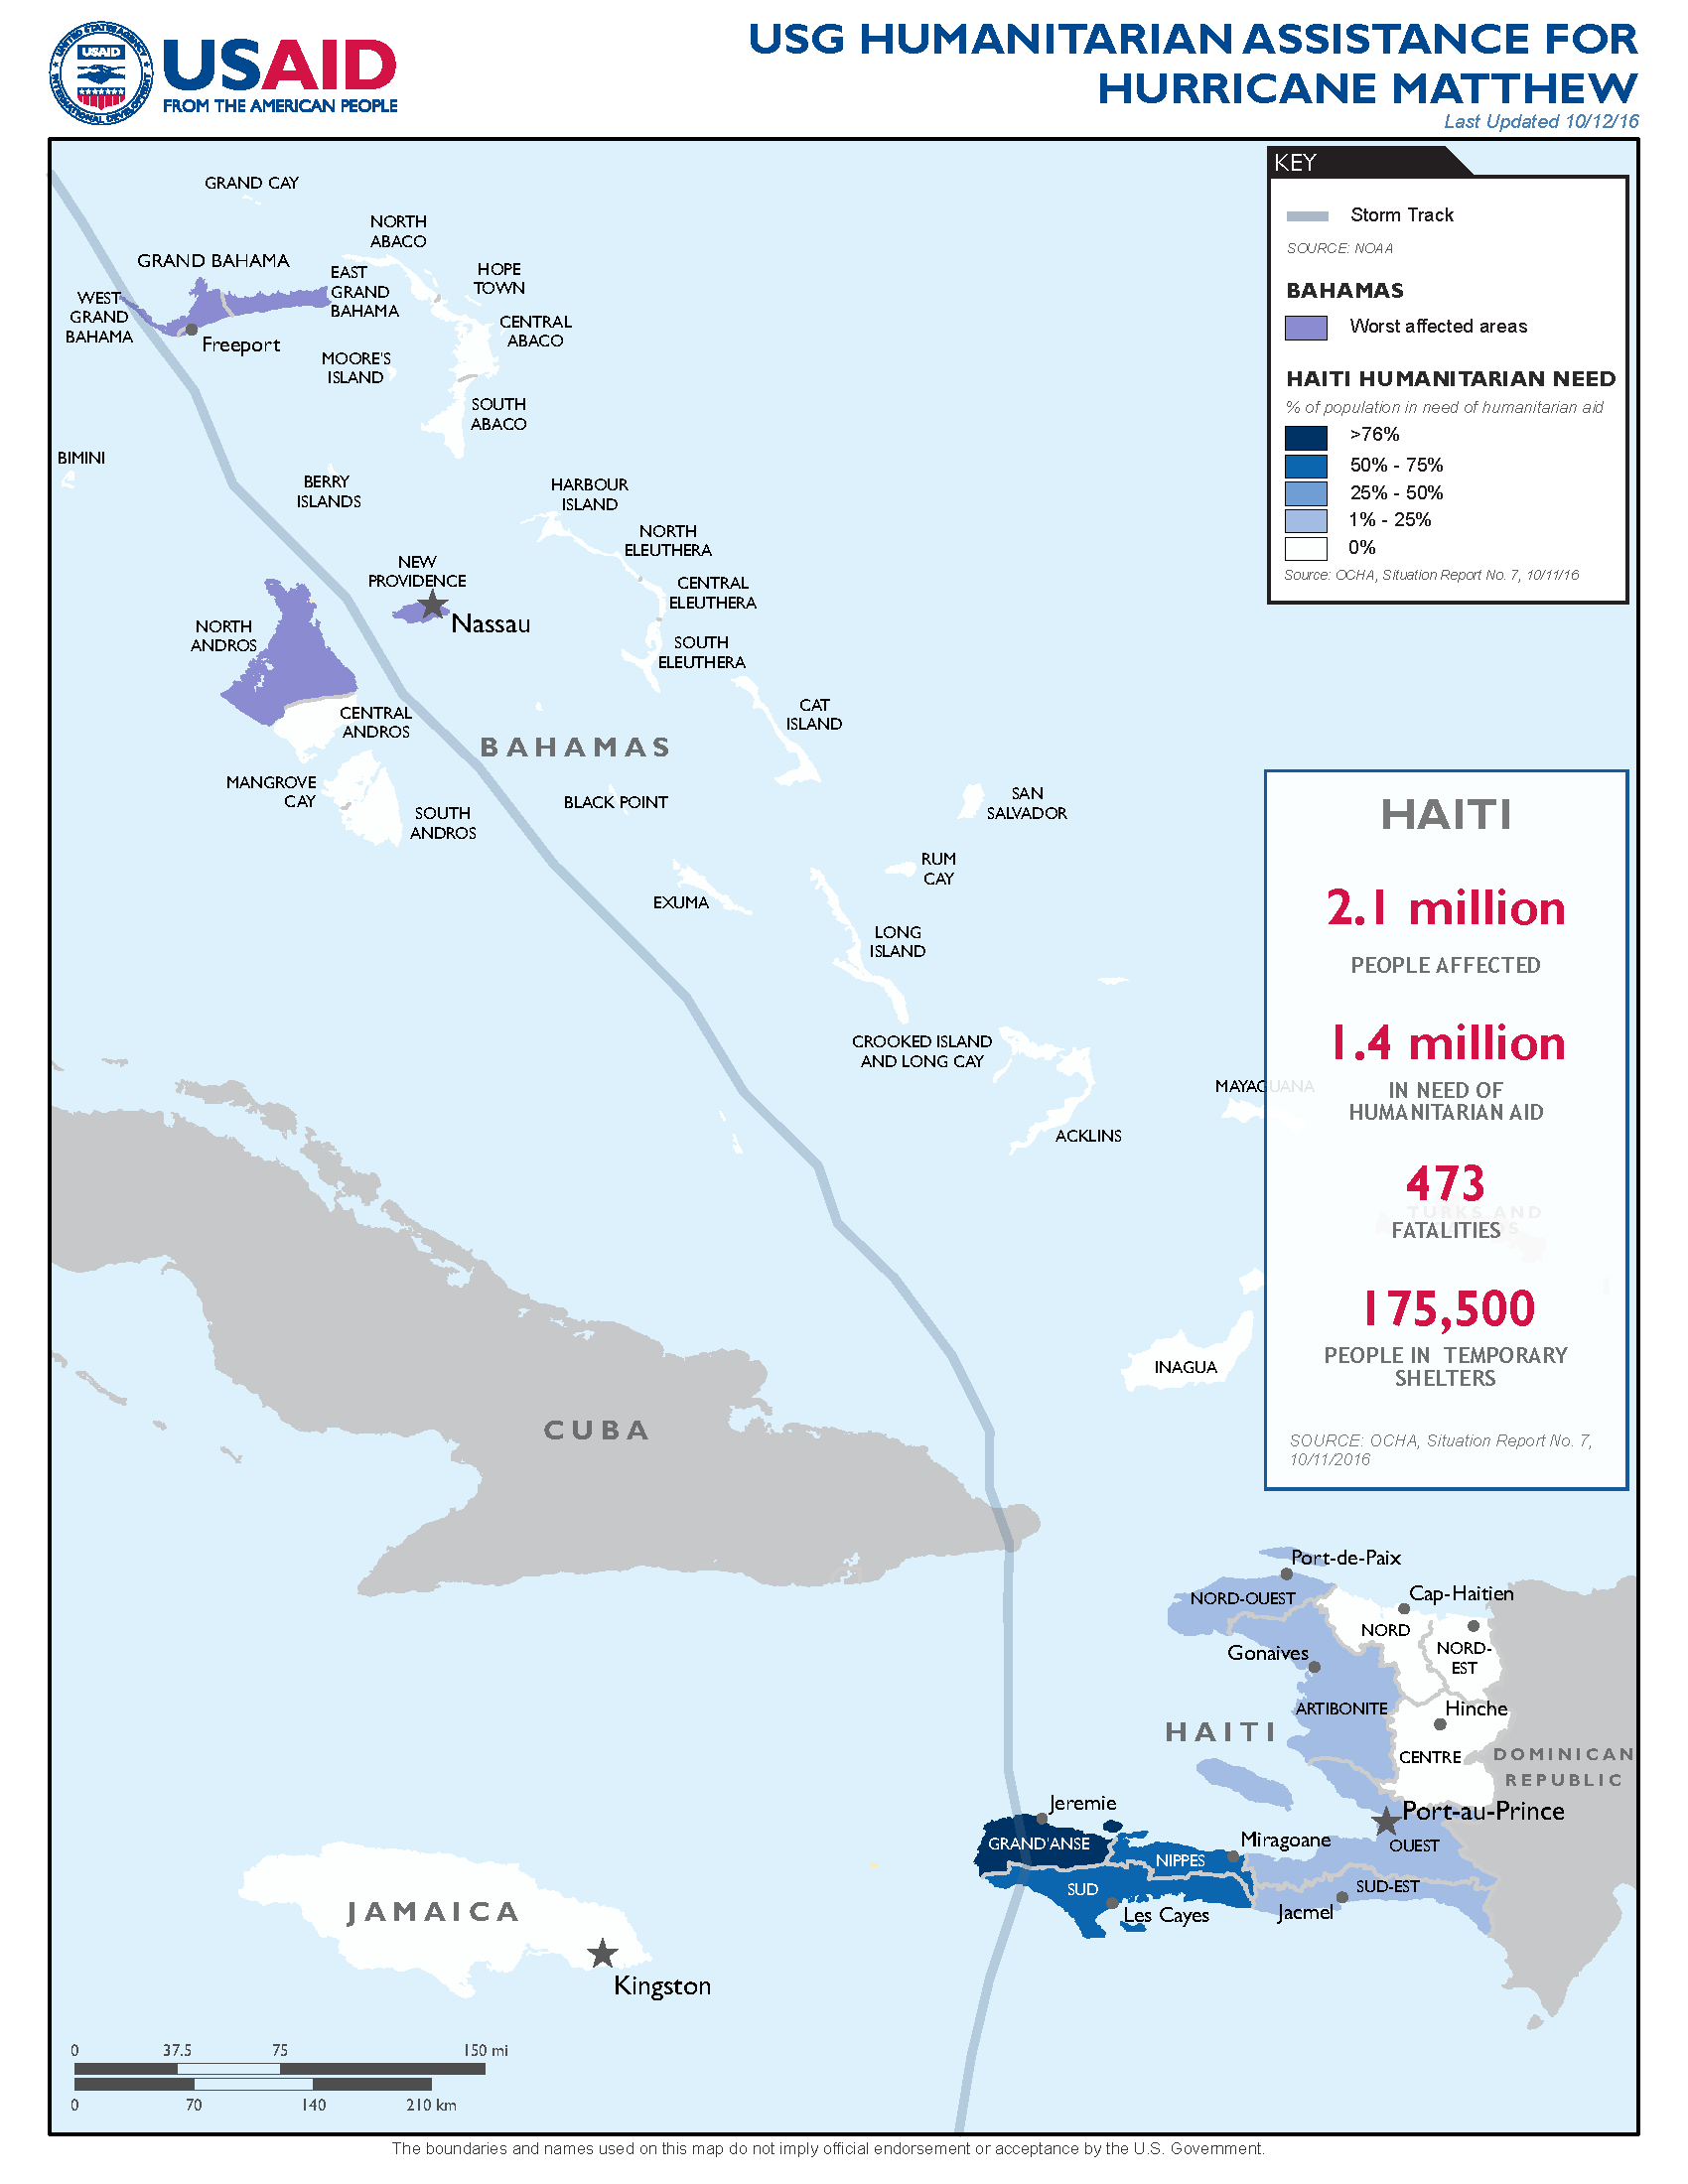 Map: USG Humanitarian Assistance for Hurricane Matthew - October 12, 2016